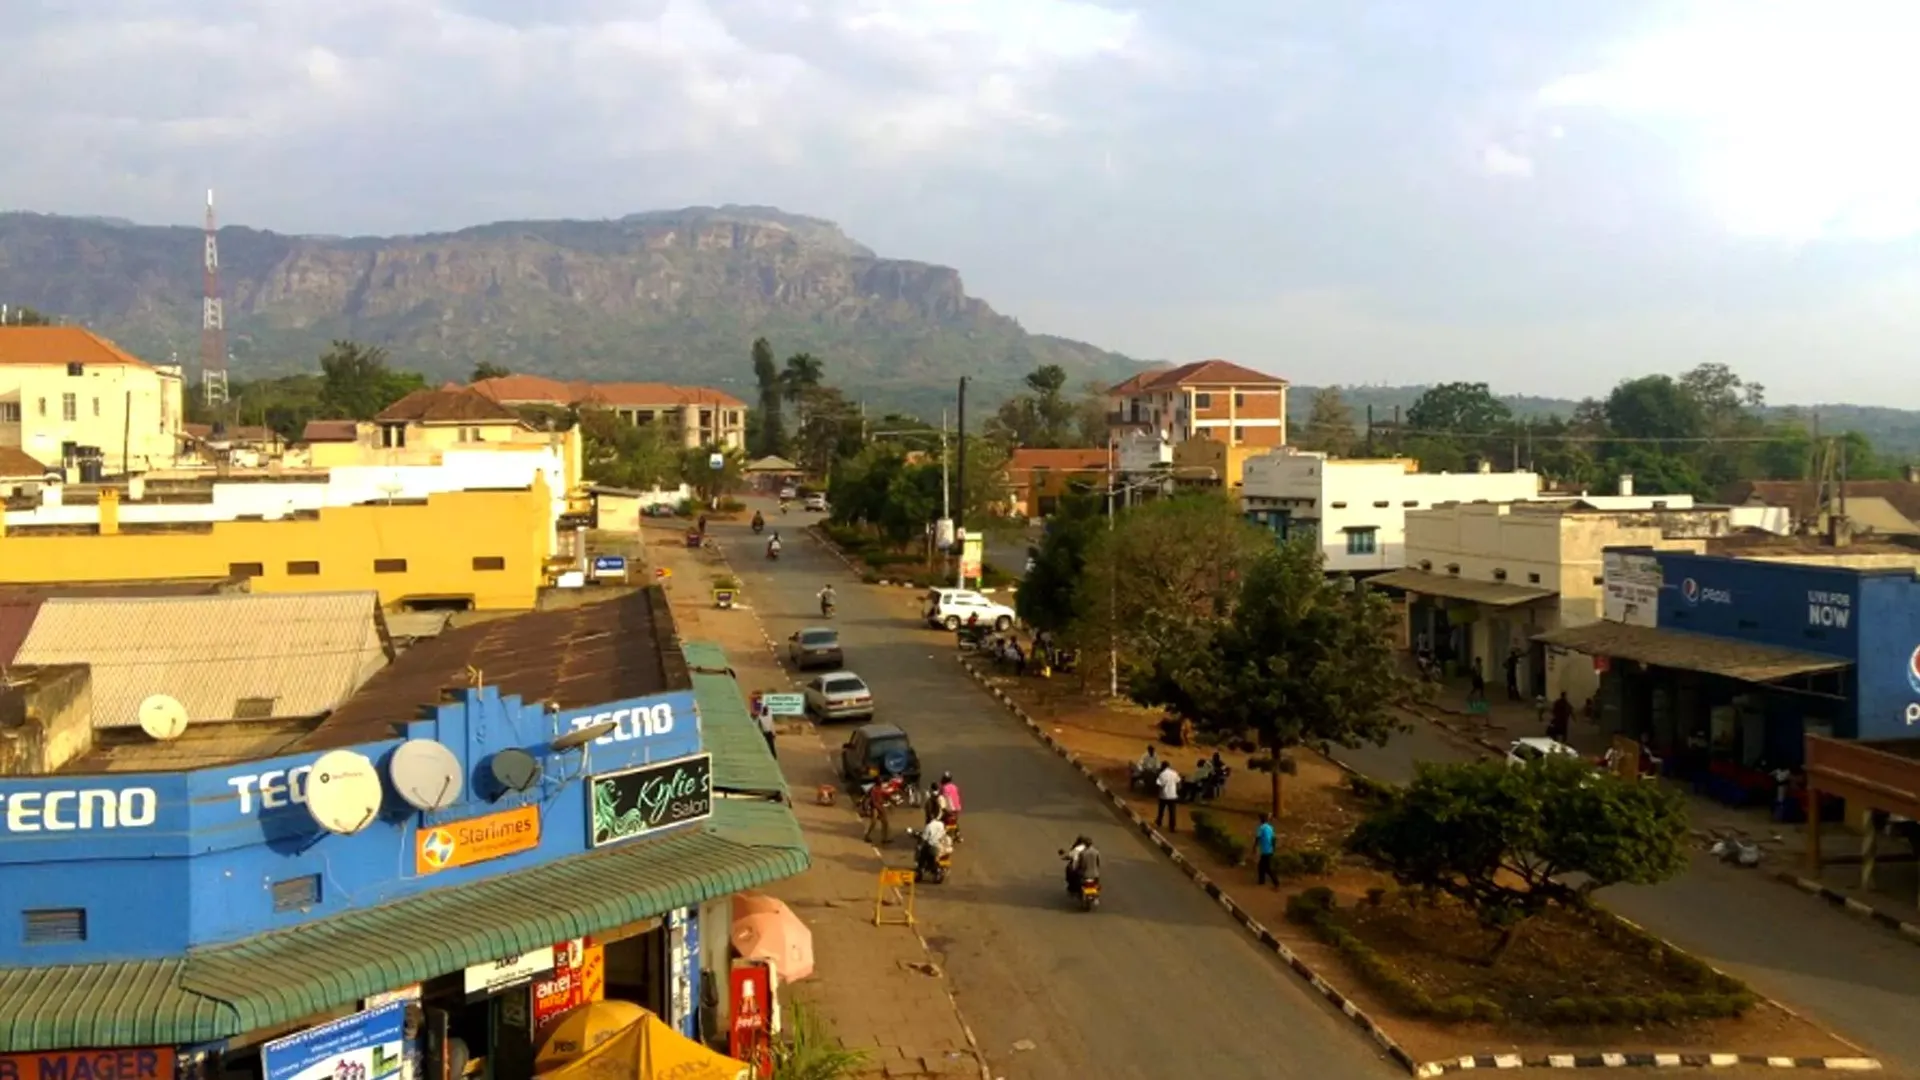 Mbale | Eastern Region, Uganda - Rated 4.4